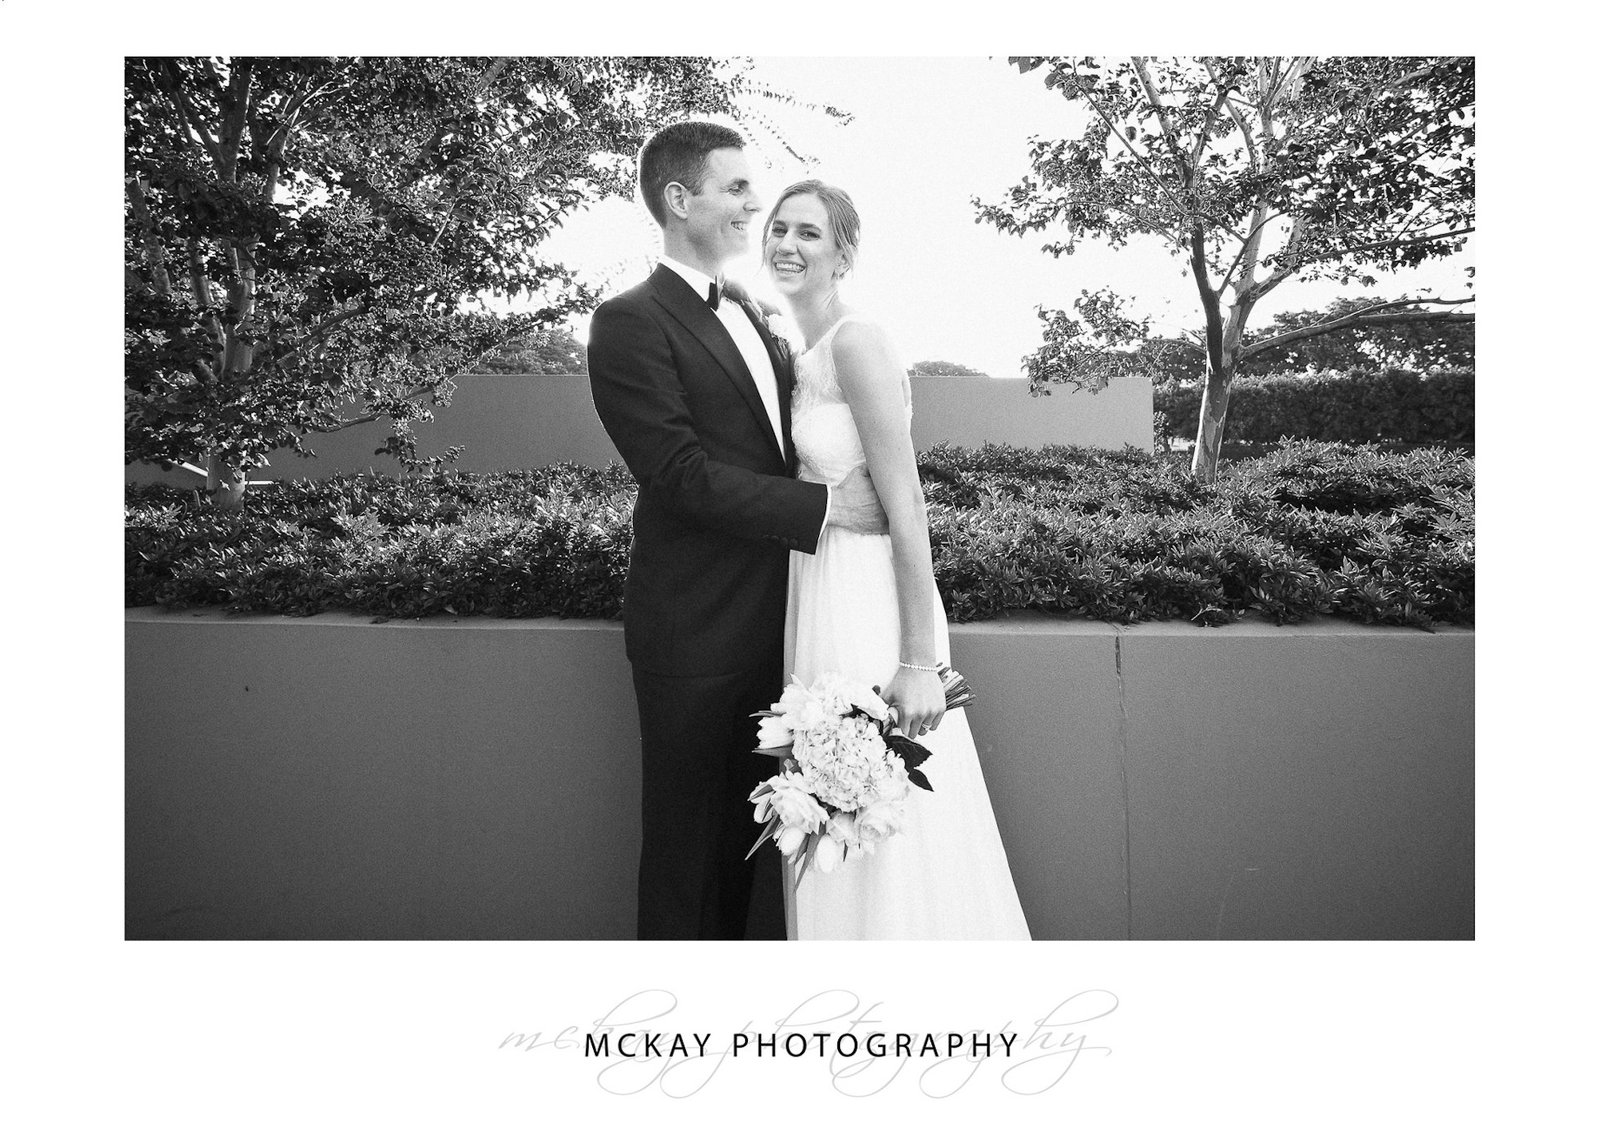 Black and white candid wedding photo